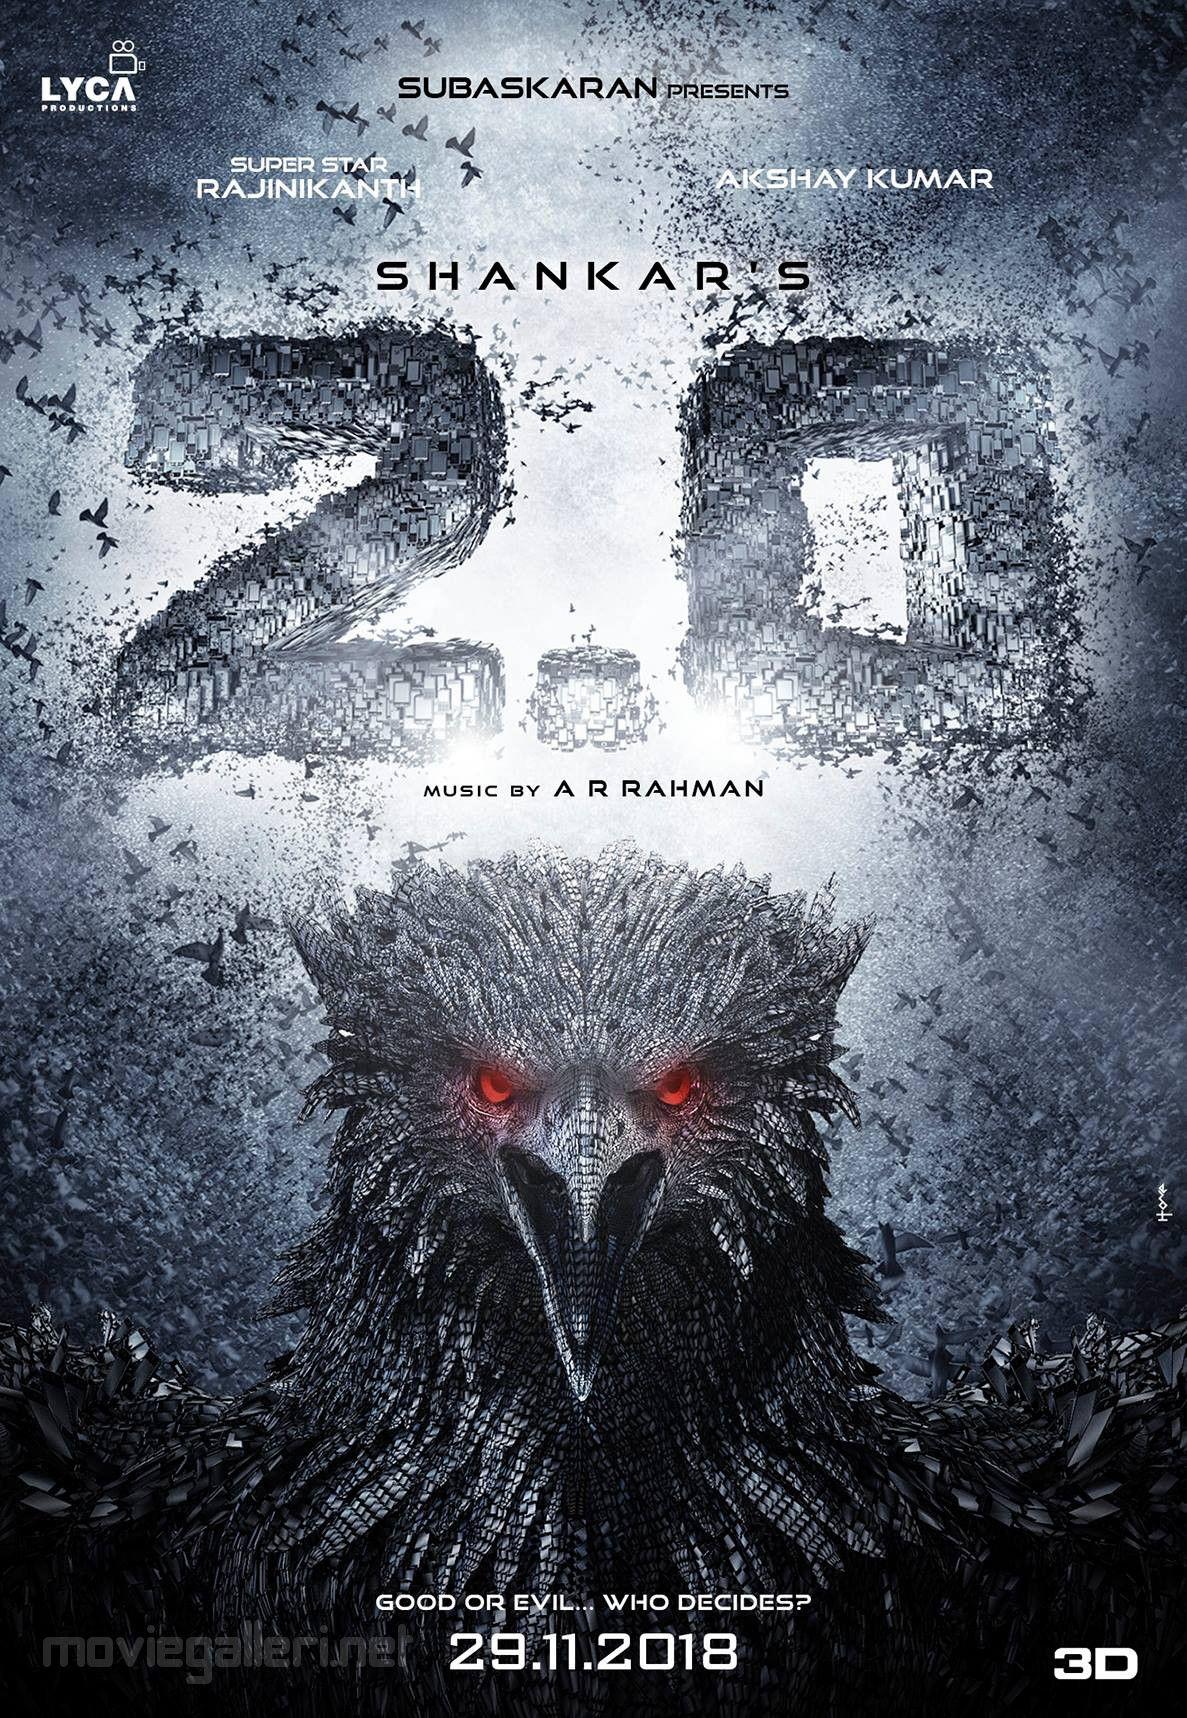 Rajinikanth's 2.0 Movie Release Date 29 November 2018 Poster HD